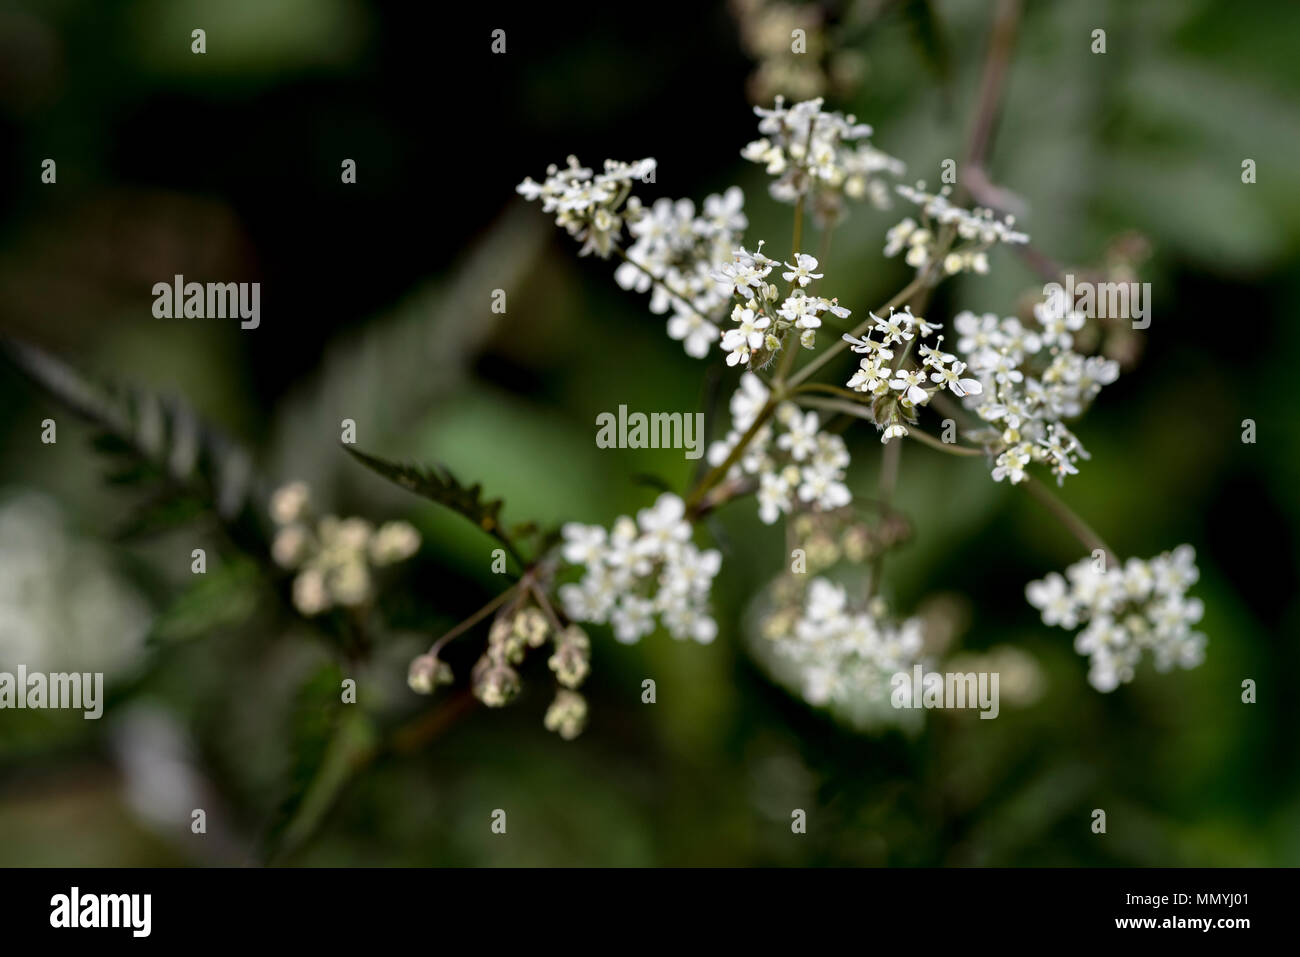 Anthriscus sylvestris  Ravenswing, apiaceae. Cow parsley, white flowers. Stock Photo